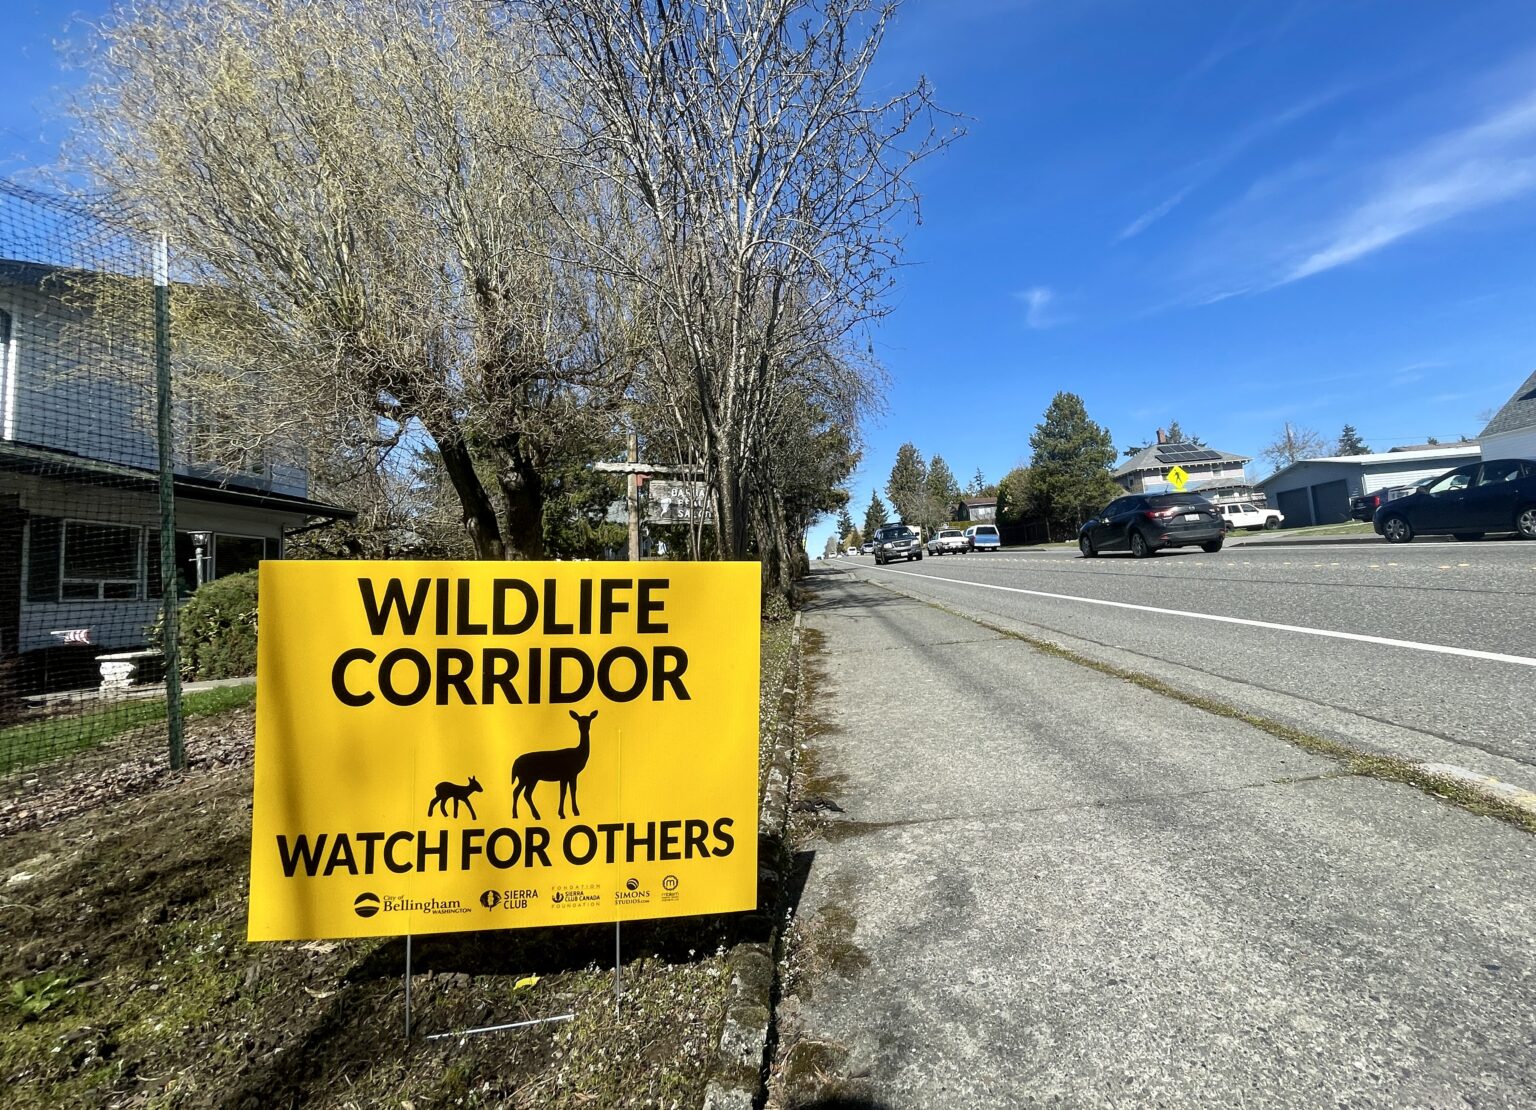 Bellingham uses wildlife corridor signs across the city